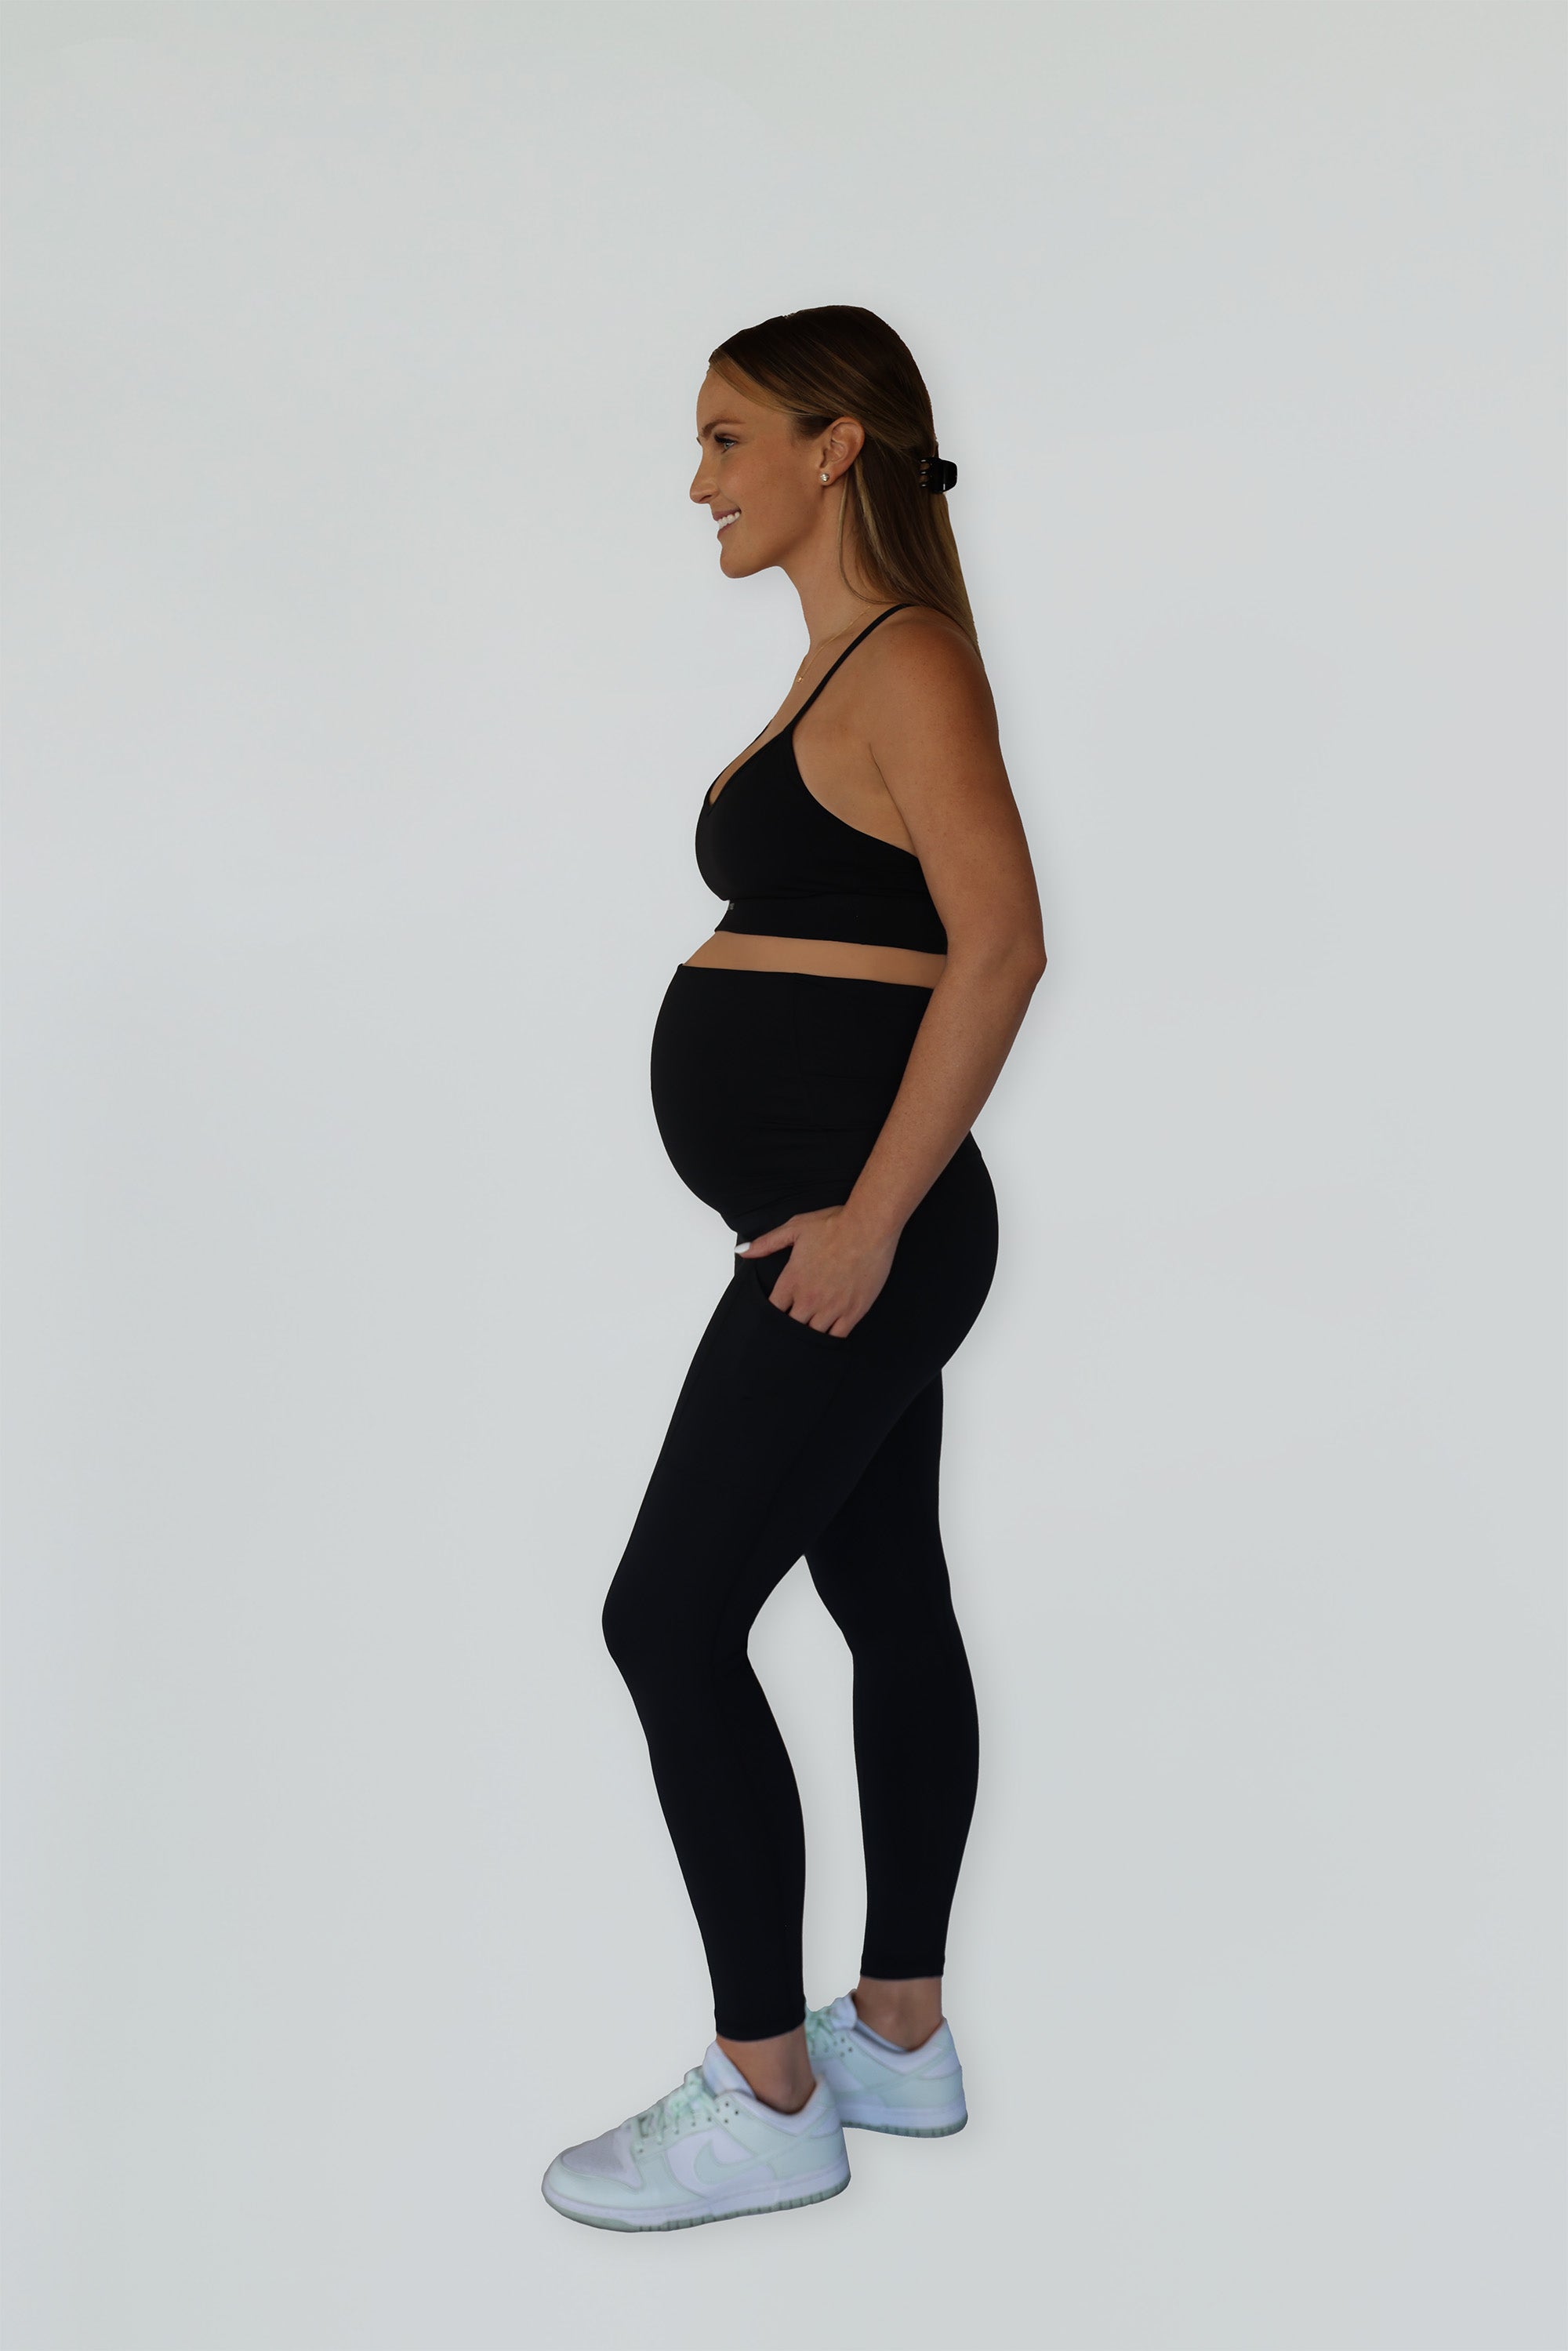 Low Rise Under Belly Stretch Pregnancy Maternity Leggings Yoga